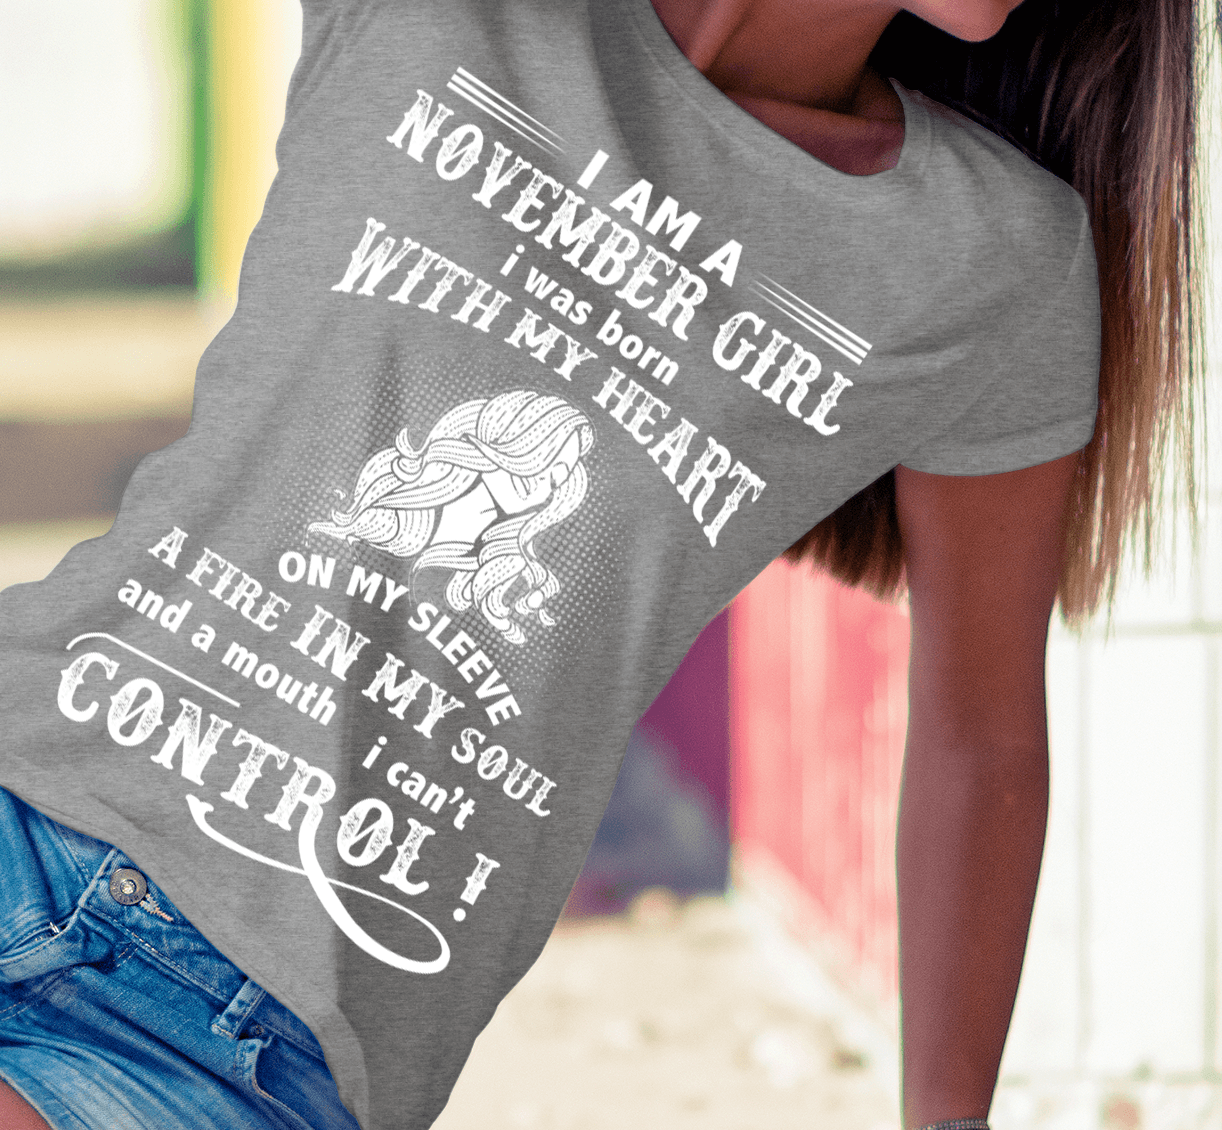 "Good Birthday Vibes For November Born Girls" Pack Of 6 Shirts